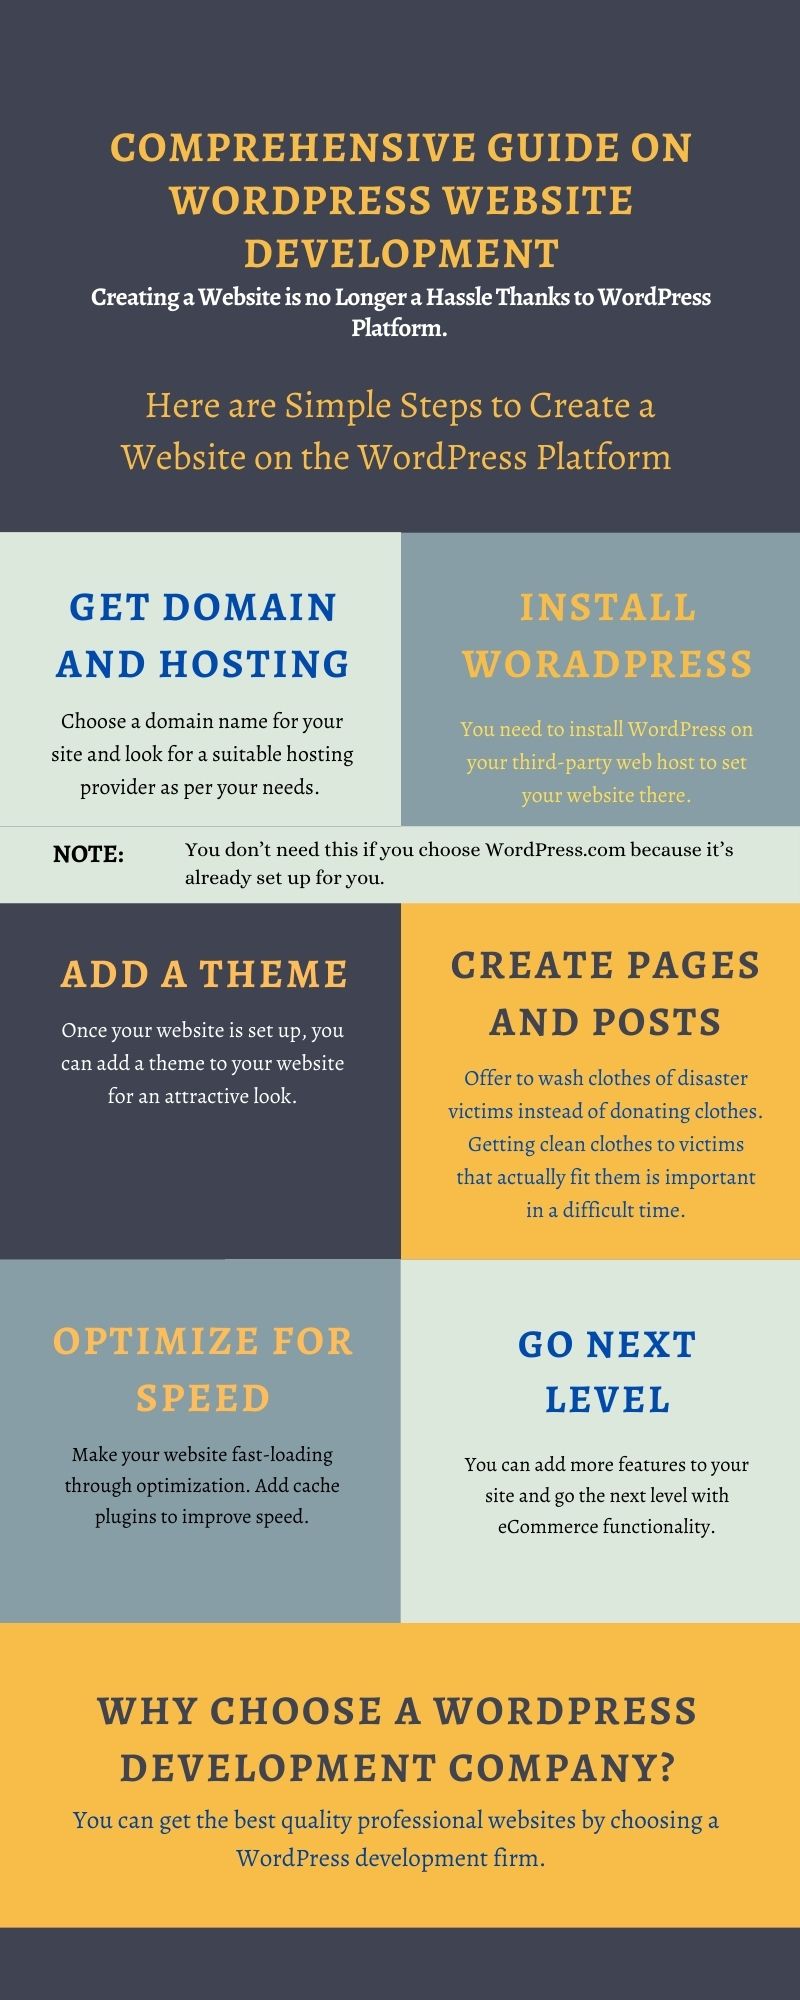 Steps for WordPress Website Development 